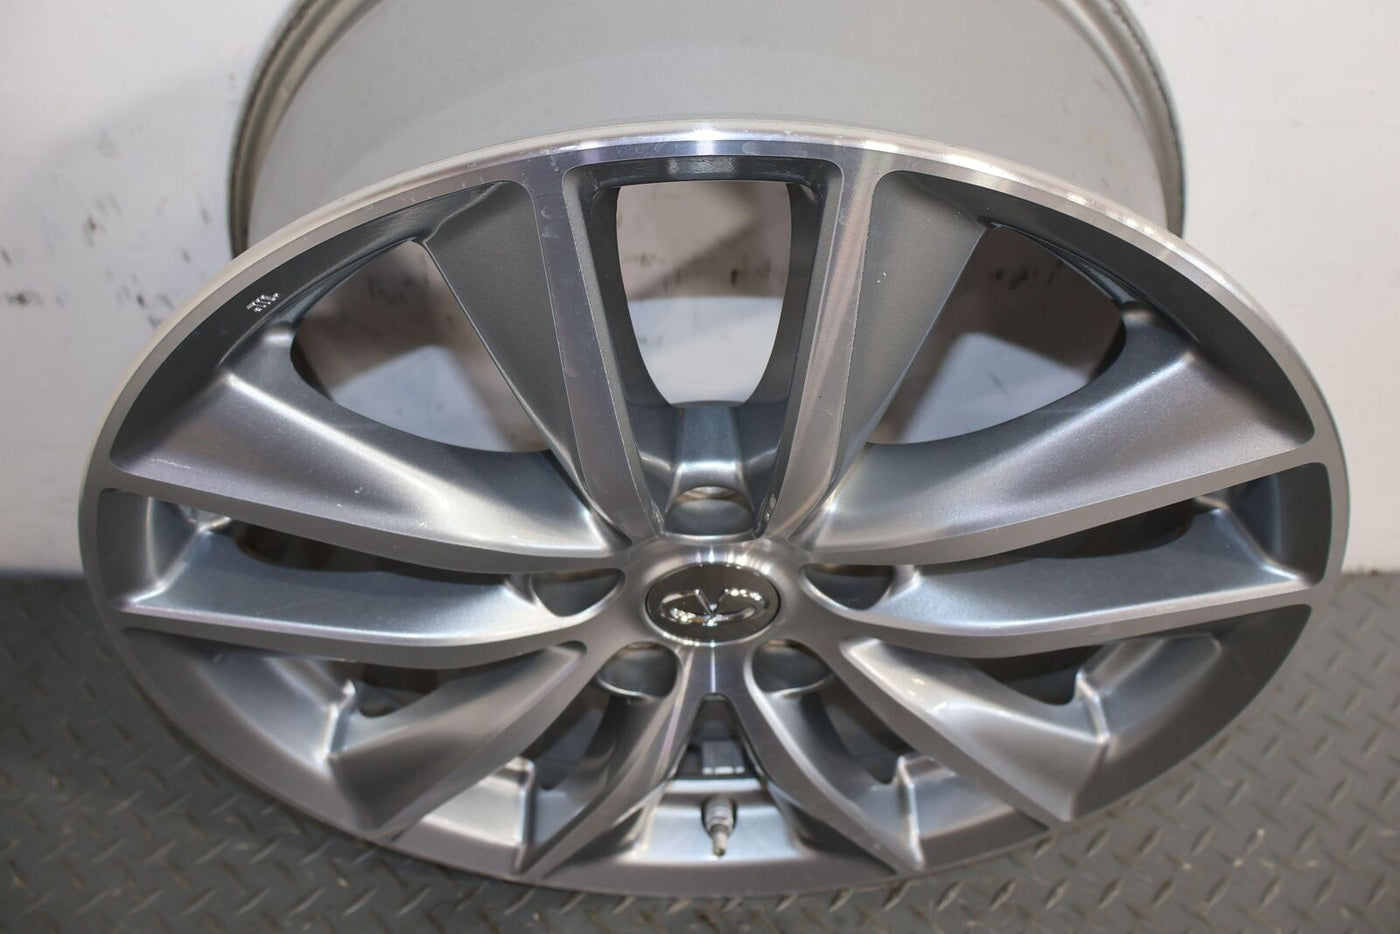 14-17 Infiniti Q50 17X7.5 OEM 5 V Spoke Wheels Set of 4 (Painted Silver)